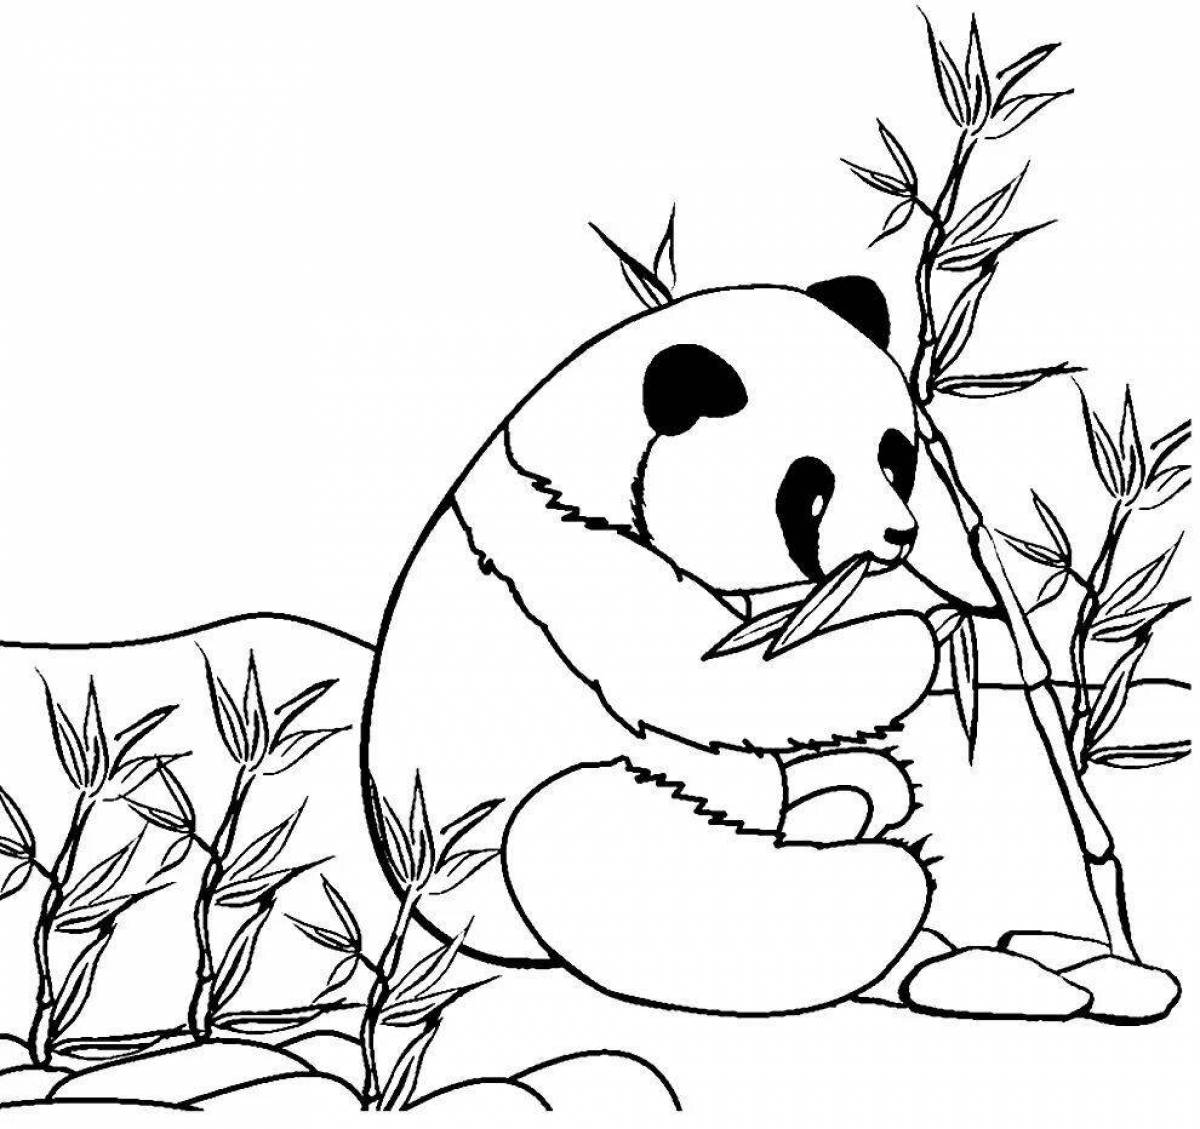 Wonderful panda coloring book with bamboo